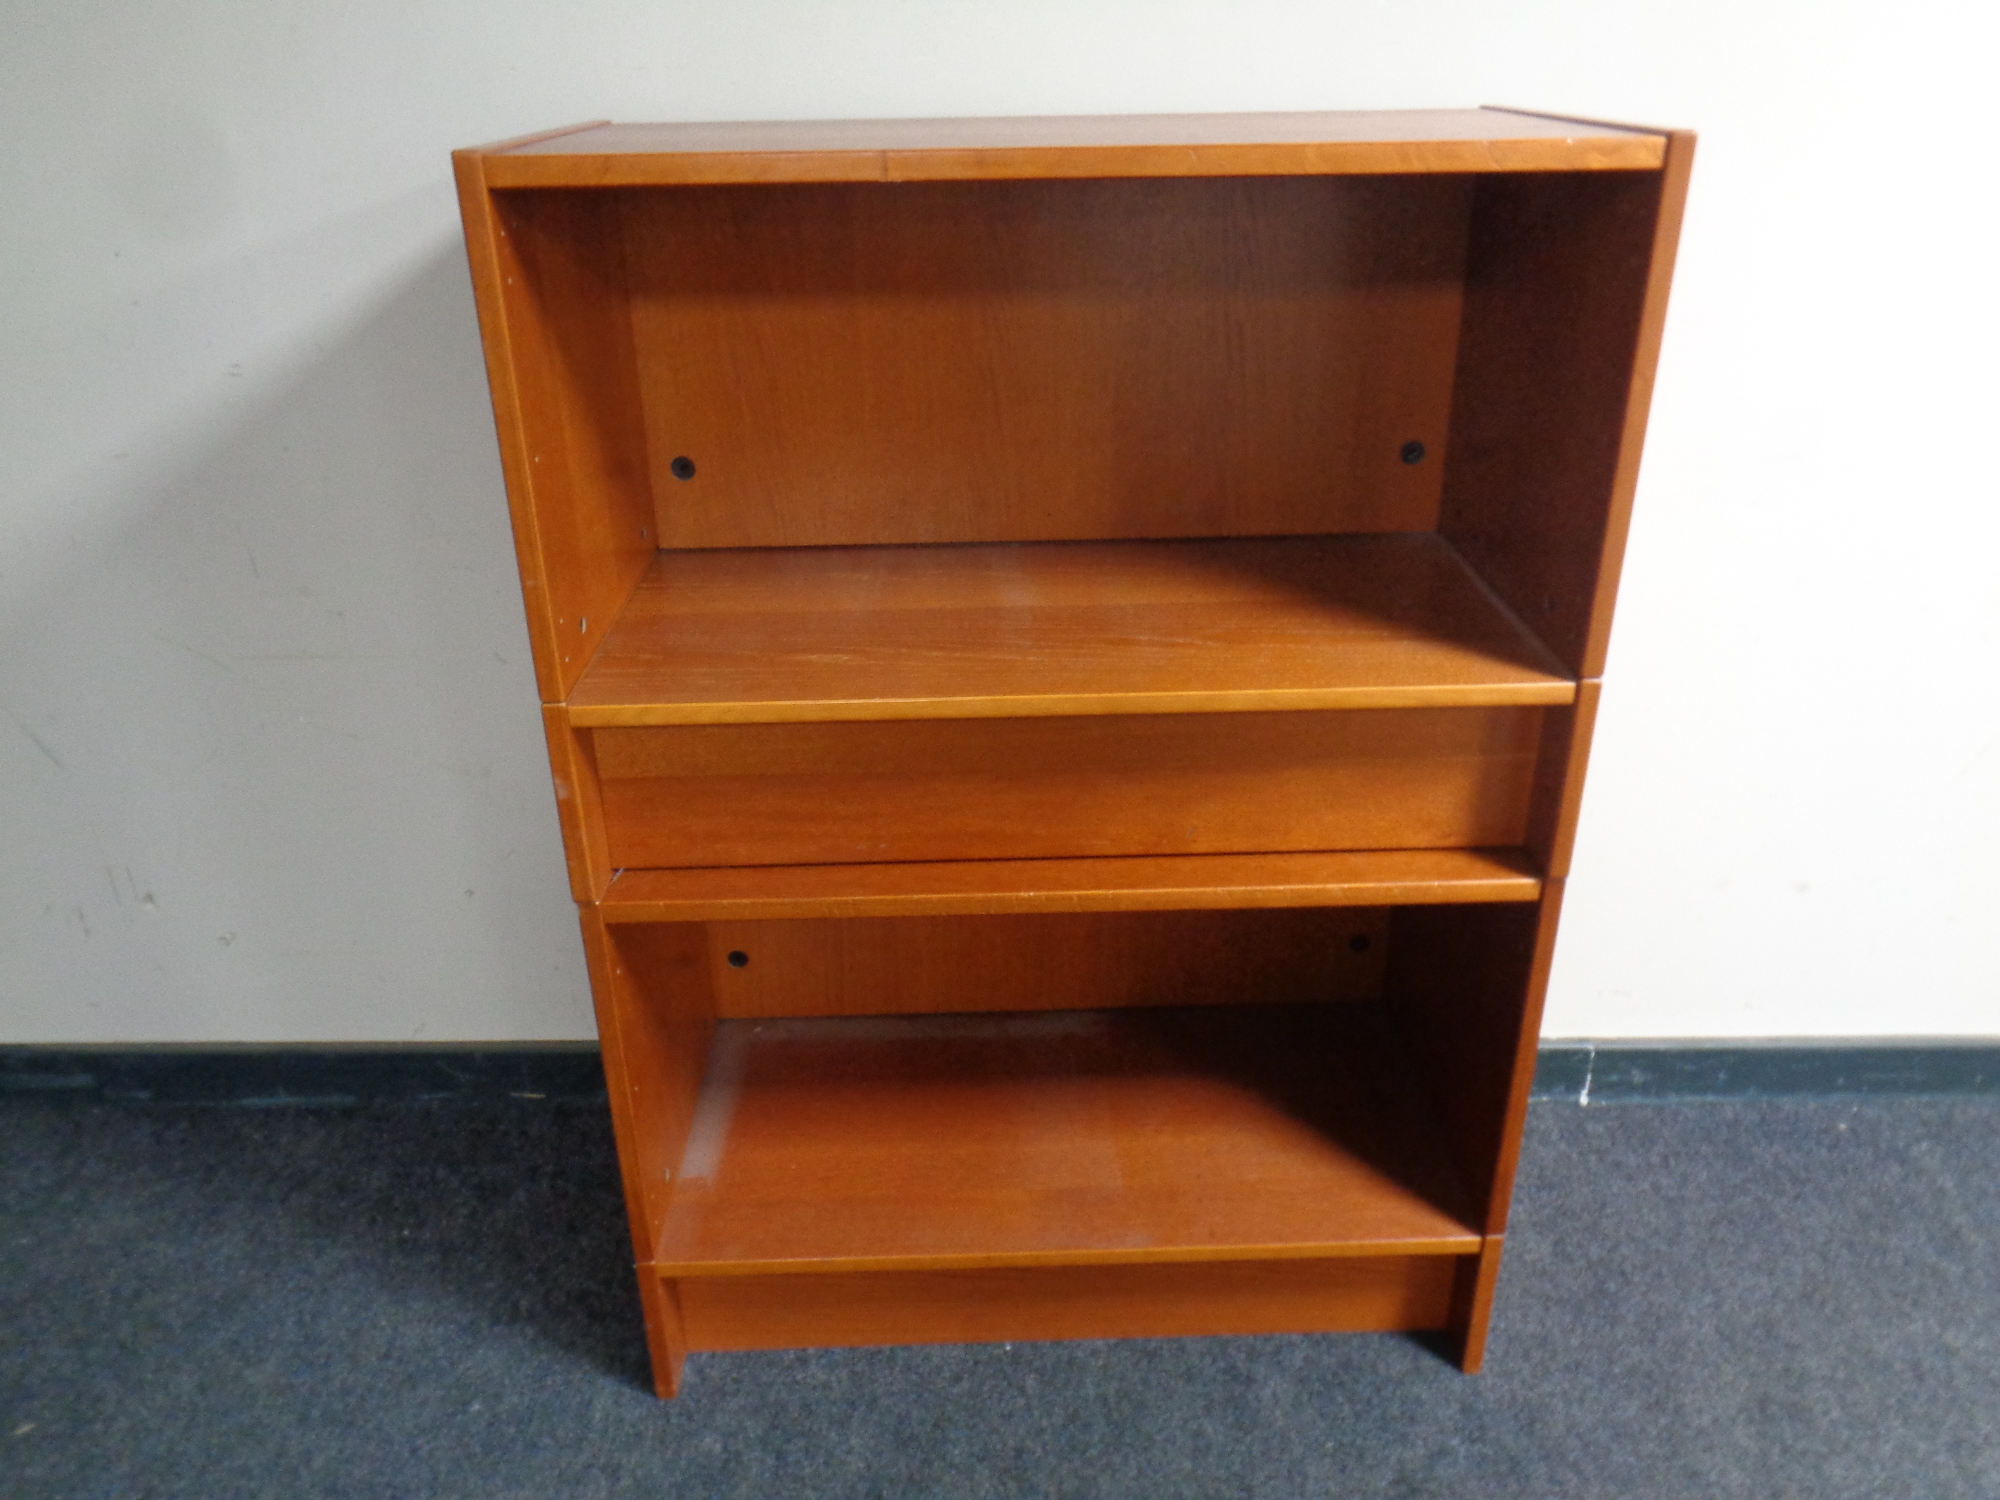 A pair of office open shelves in a teak finish, width 84cm,